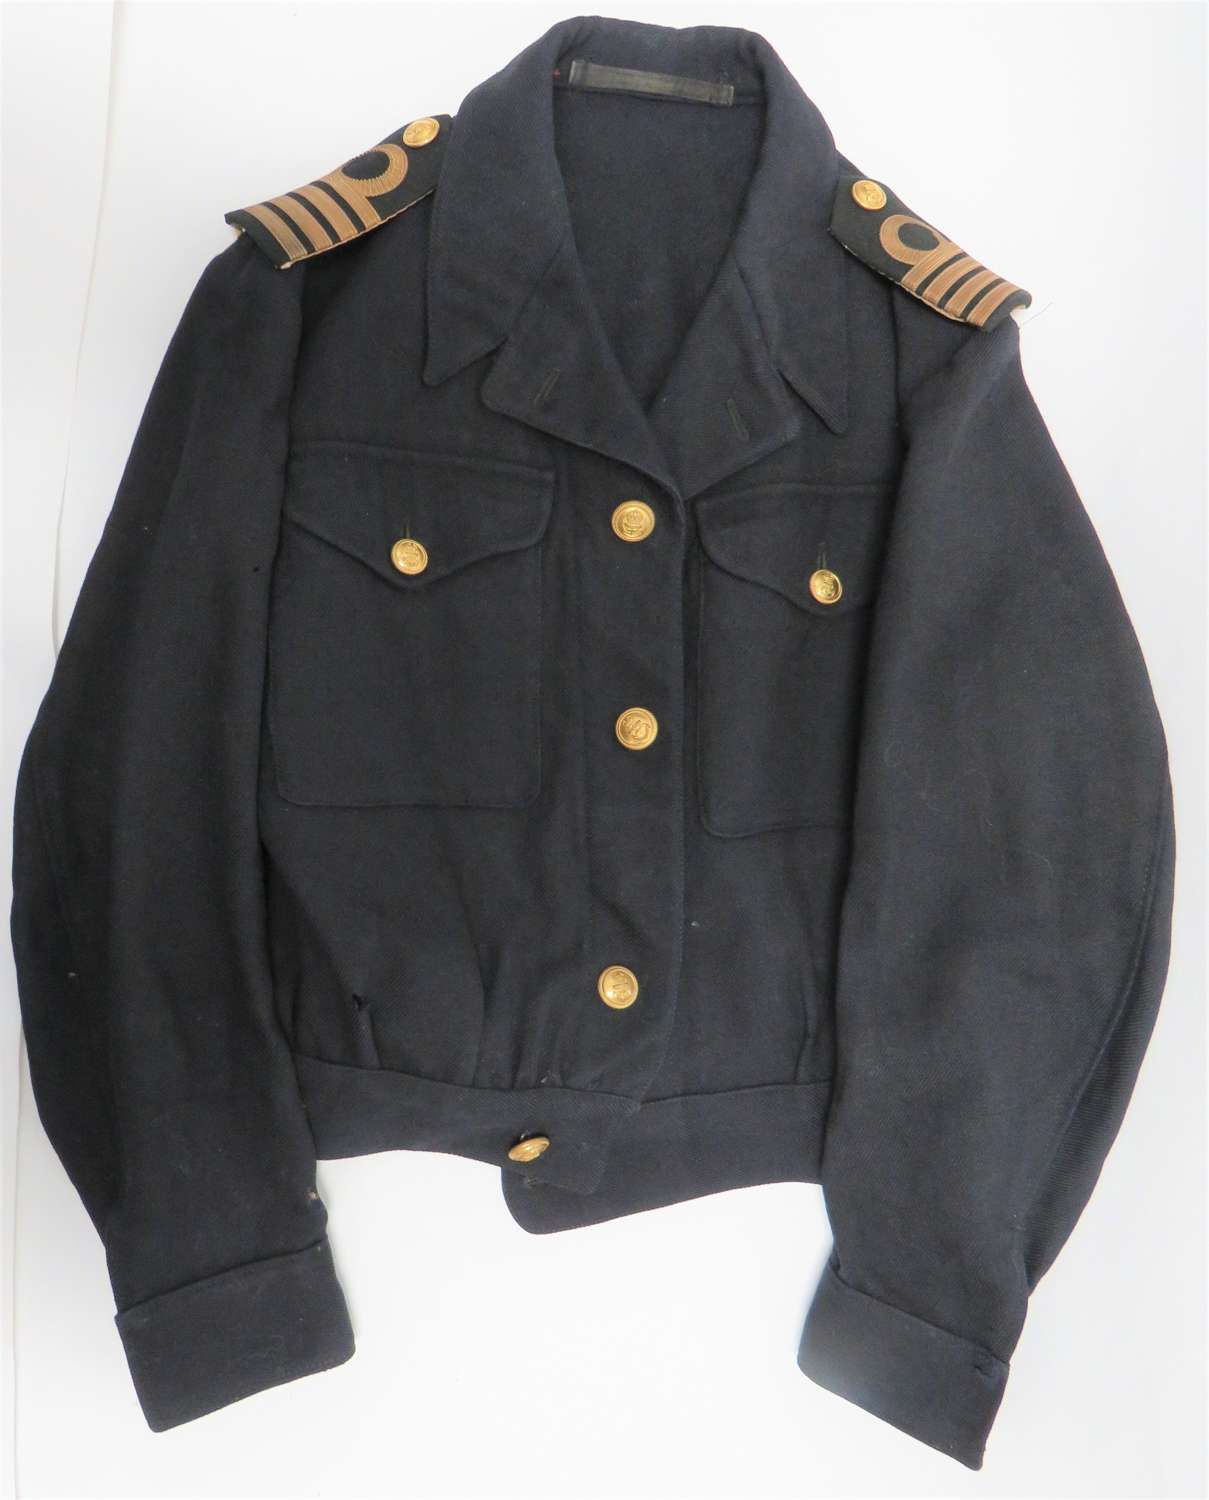 1944 Dated Royal Navy Captains Battle Dress Jacket